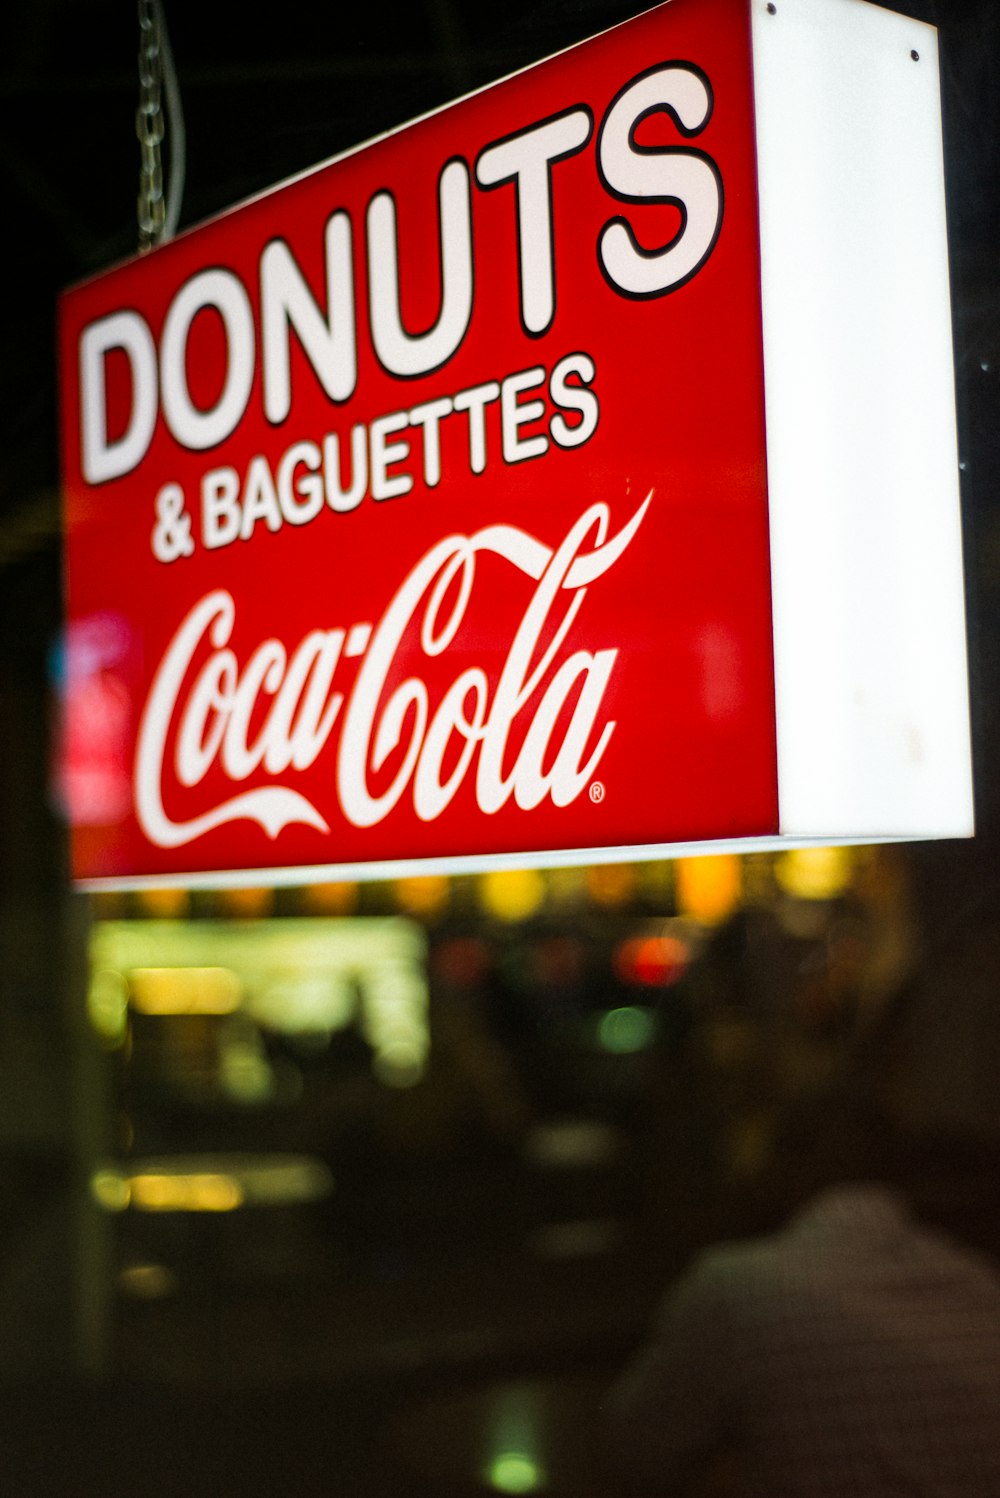 Donuts & Baguettes Coca-Cola 간판의 근접 사진